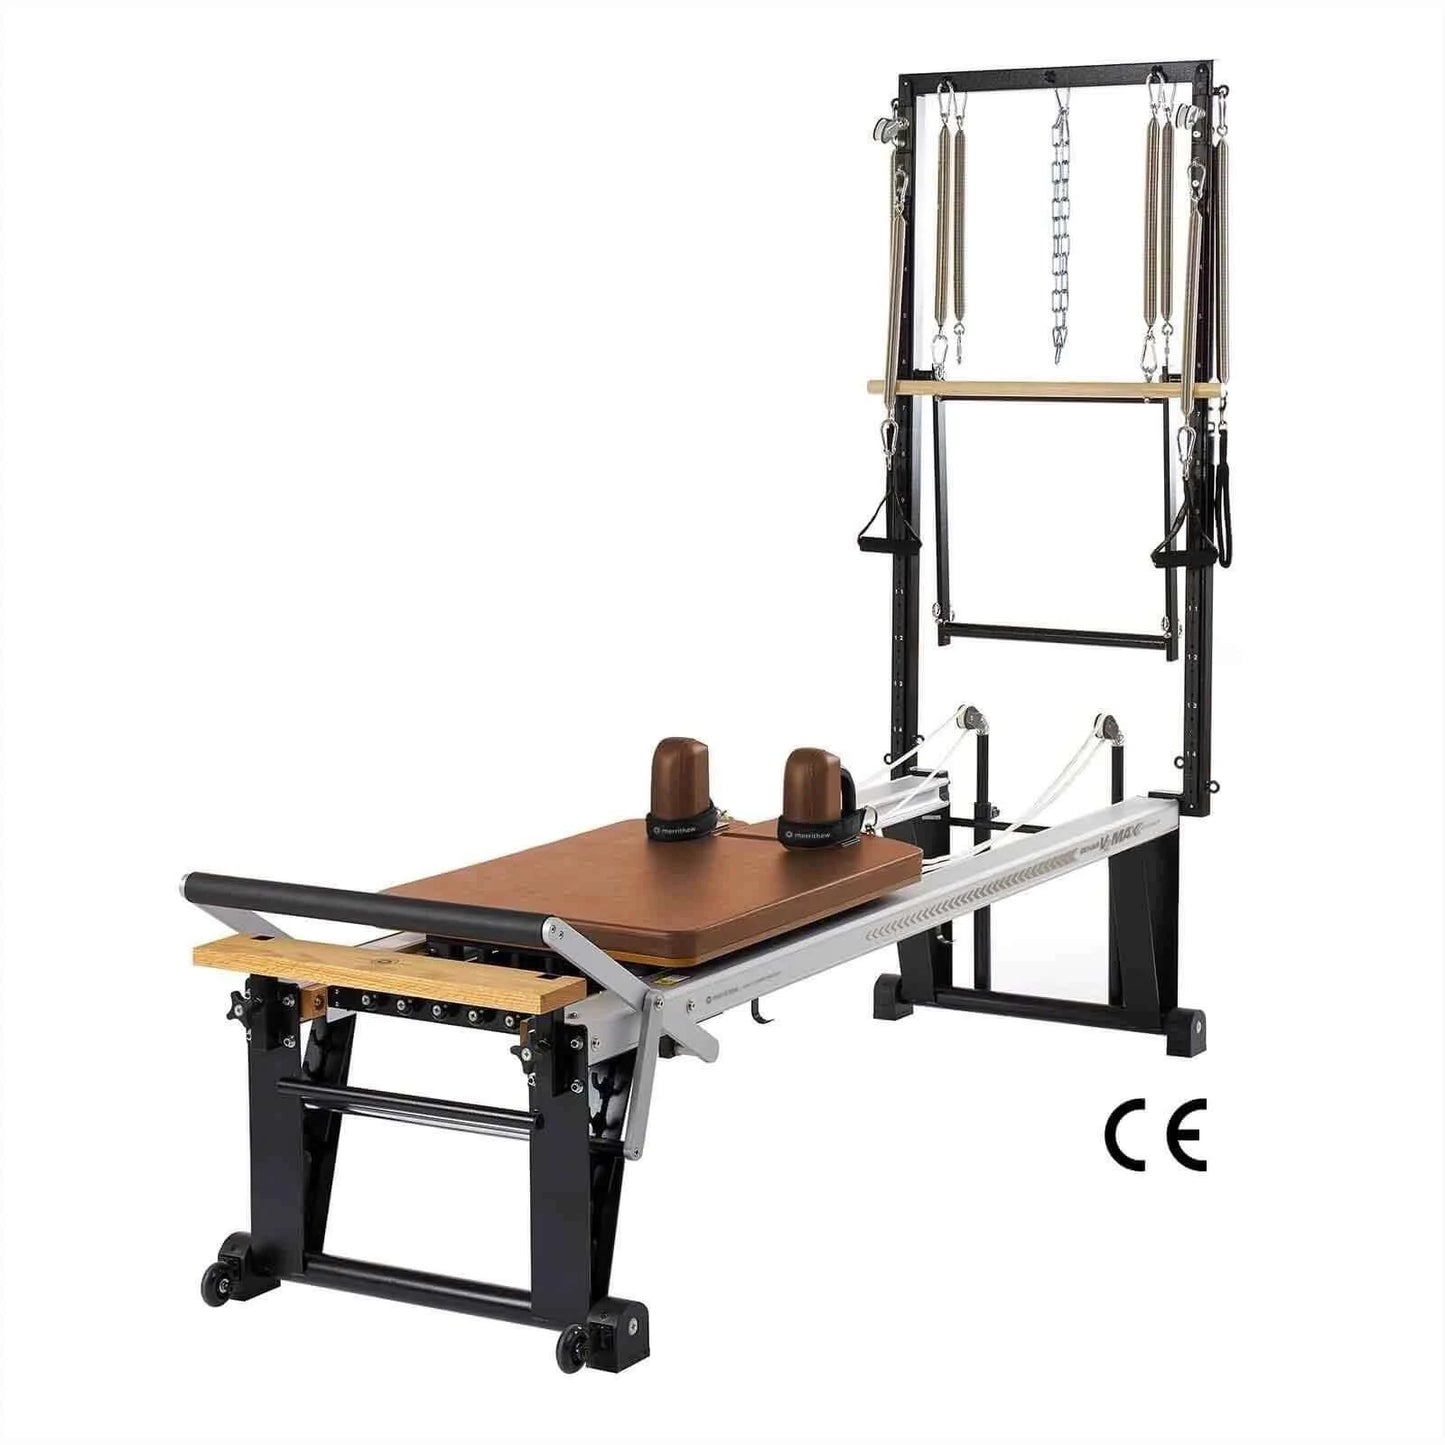 Sierra Brick Merrithew™ Pilates Rehab V2 Max Plus™ Reformer Machine by Merrithew™ sold by Pilates Matters® by BSP LLC